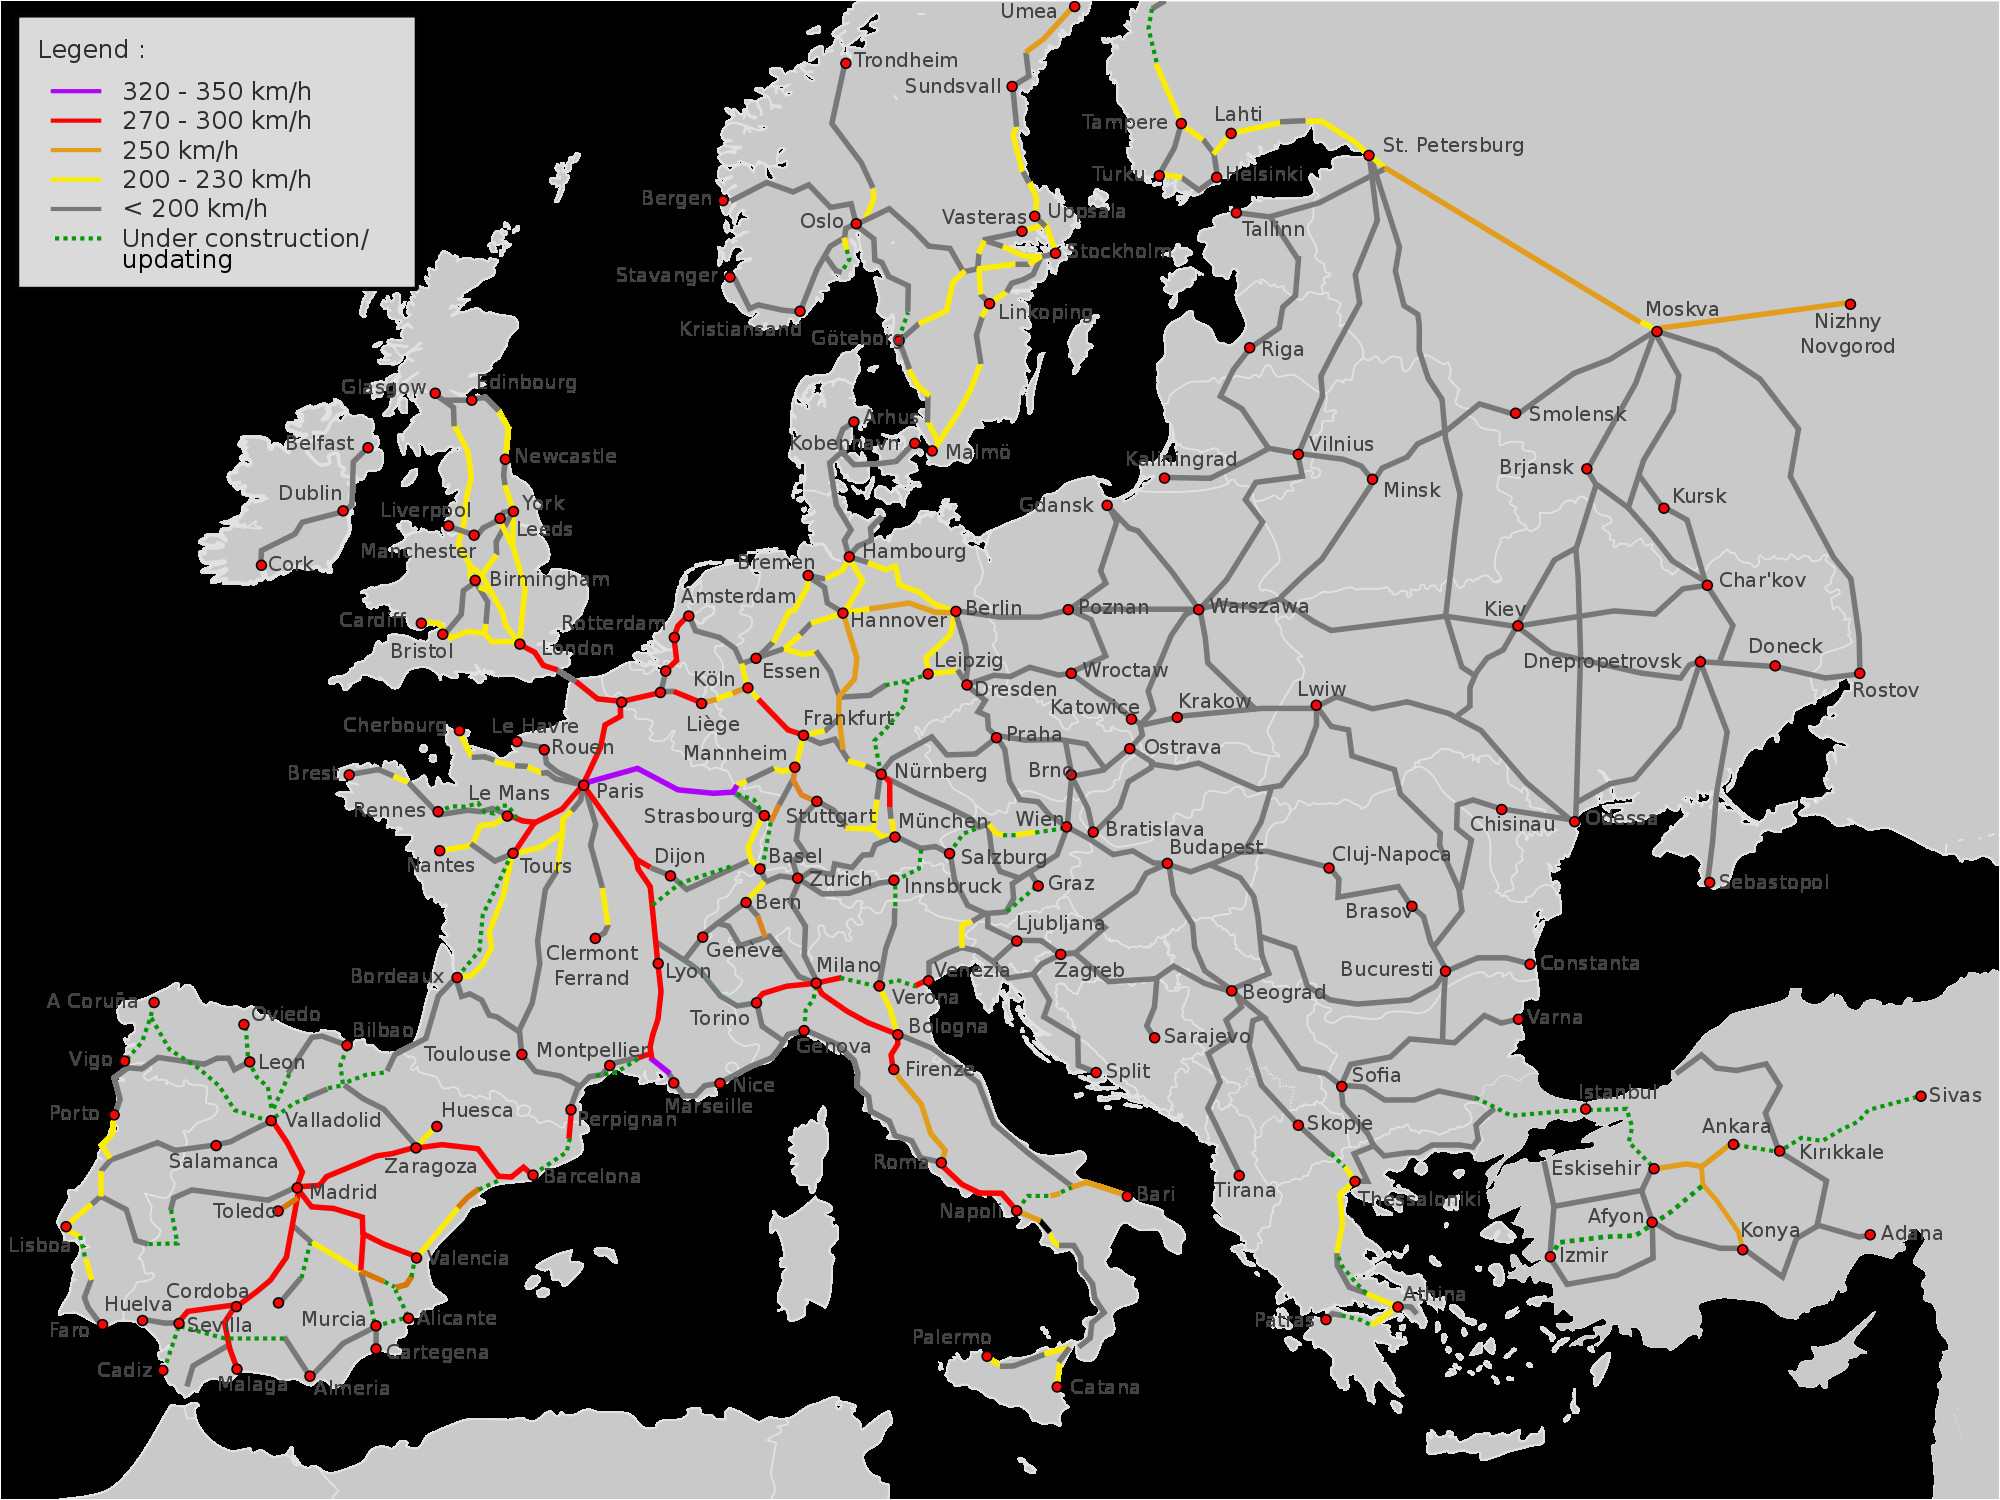 eu hsr network plan infrastructure of china map diagram europe